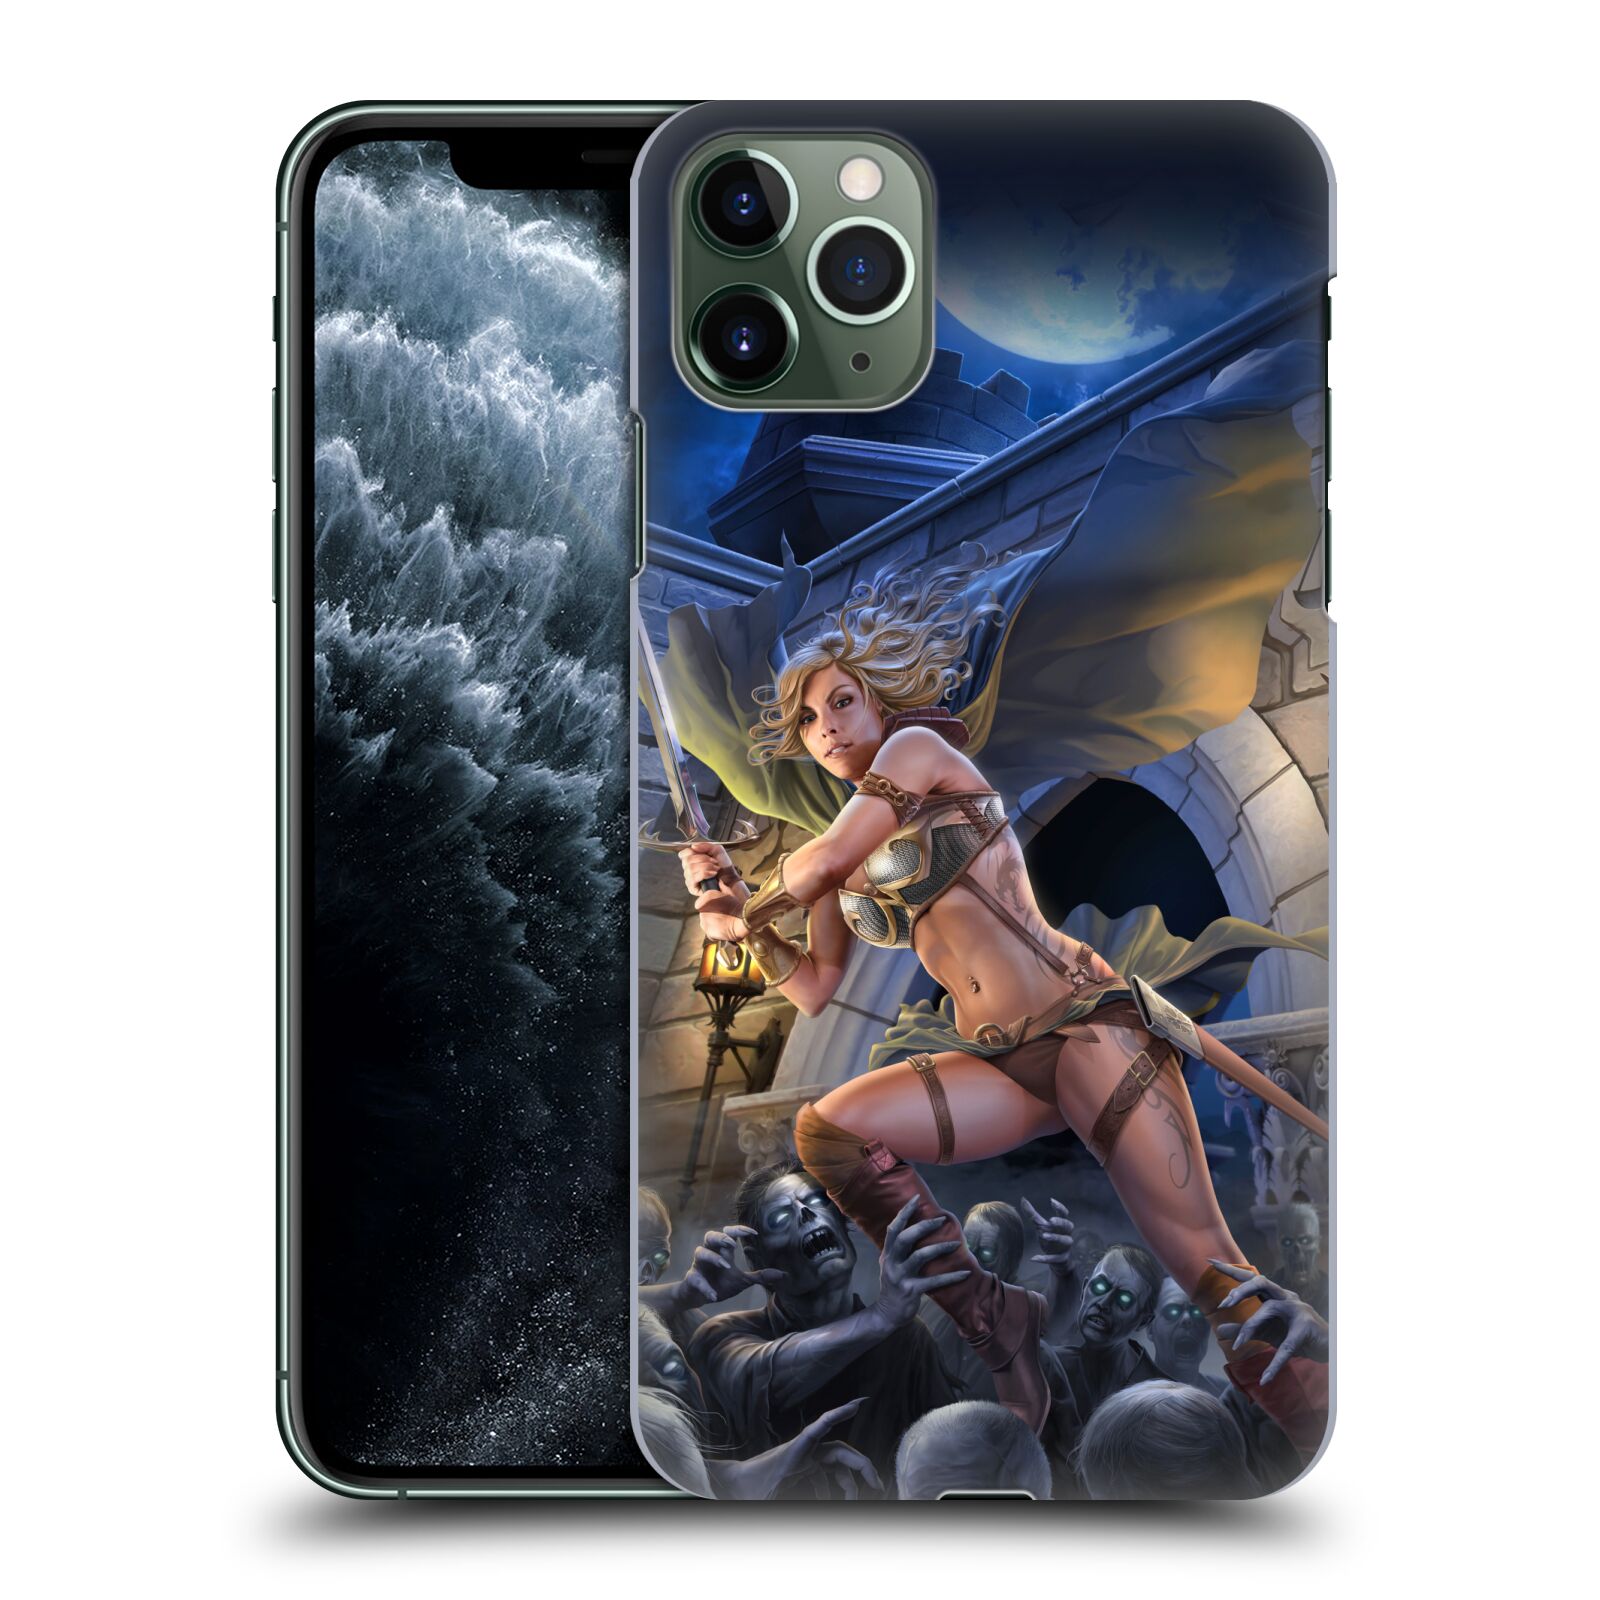 Pouzdro na mobil Apple Iphone 11 PRO MAX - HEAD CASE - Fantasy kresby Tom Wood - Princezna bojovnice a zombies